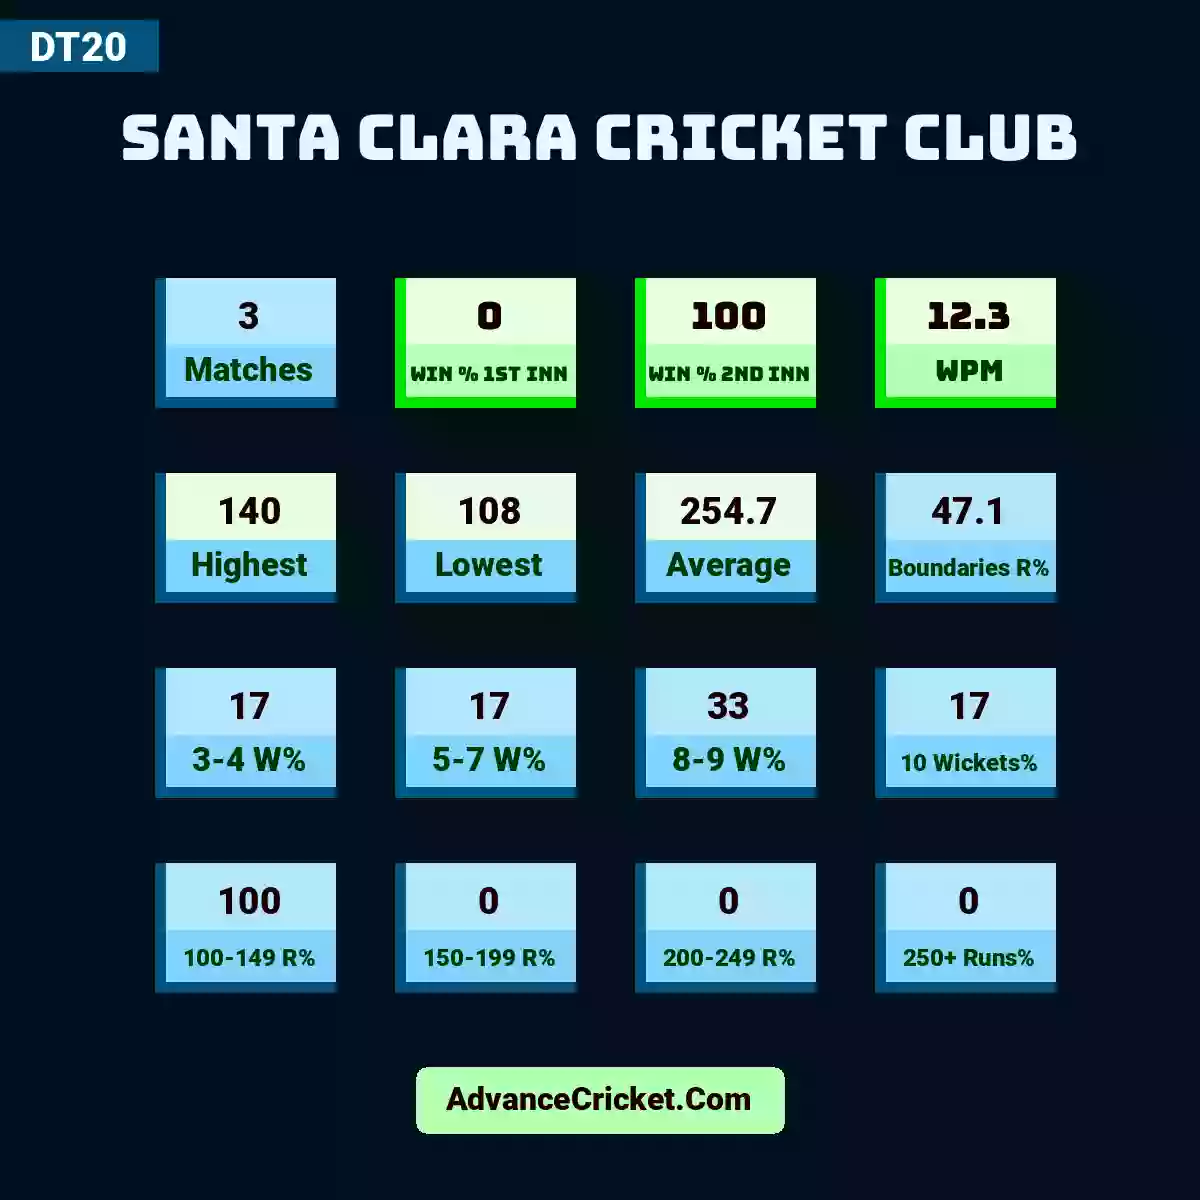 Image showing Santa Clara Cricket Club with Matches: 3, Win % 1st Inn: 0, Win % 2nd Inn: 100, WPM: 12.3, Highest: 140, Lowest: 108, Average: 254.7, Boundaries R%: 47.1, 3-4 W%: 17, 5-7 W%: 17, 8-9 W%: 33, 10 Wickets%: 17, 100-149 R%: 100, 150-199 R%: 0, 200-249 R%: 0, 250+ Runs%: 0.